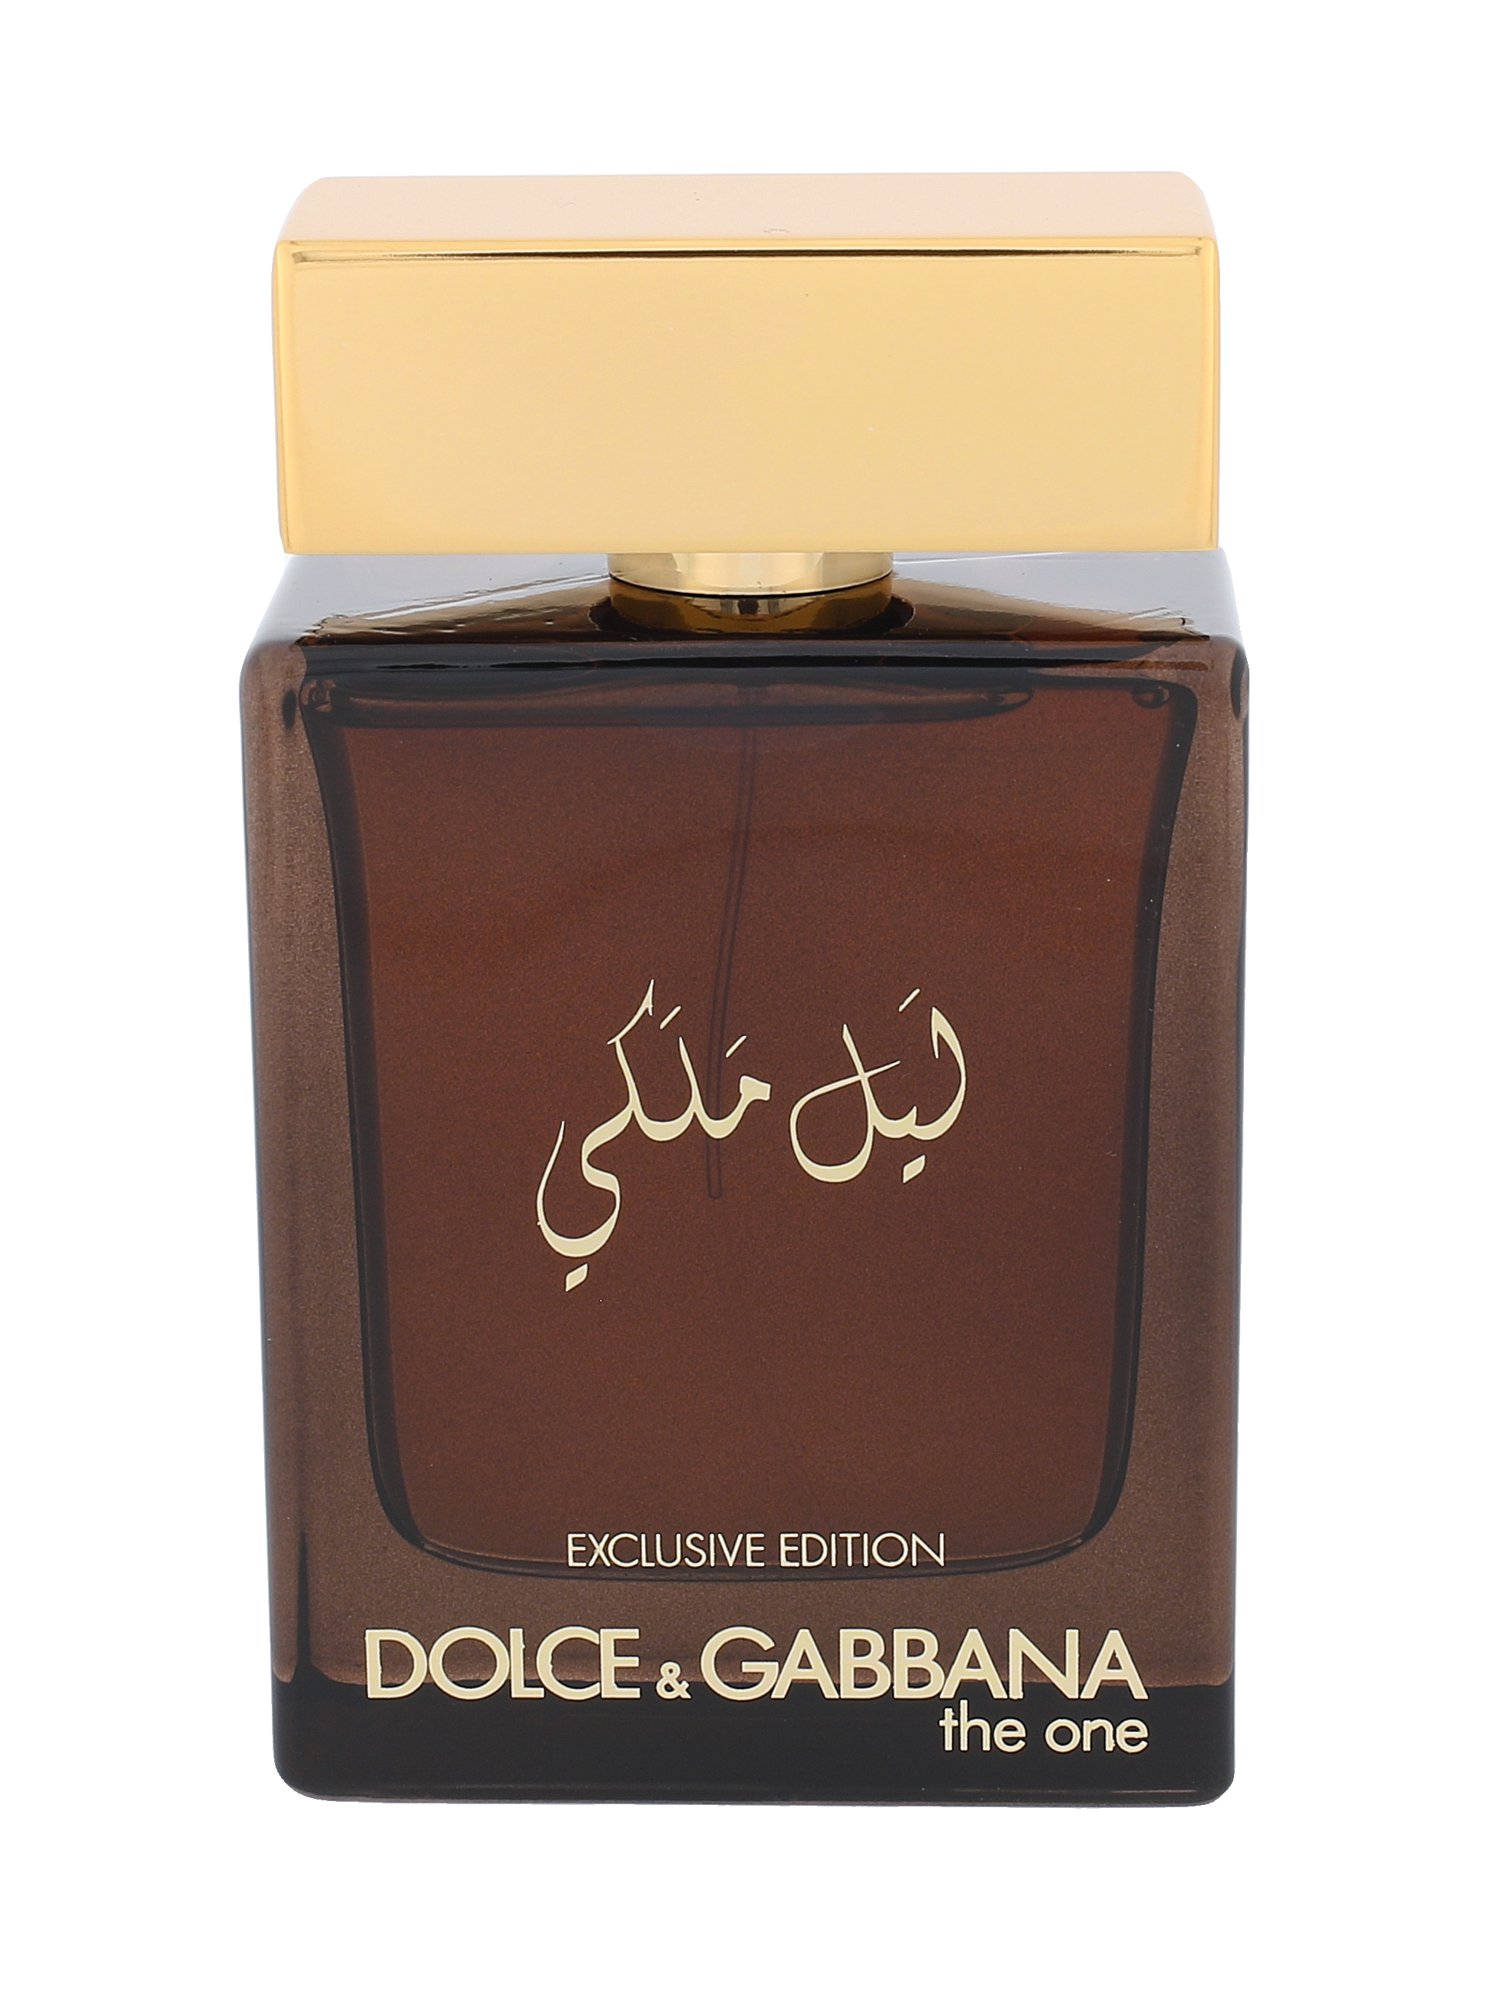 Dolce&Gabbana The One Royal Night, Parfumovaná voda 100ml